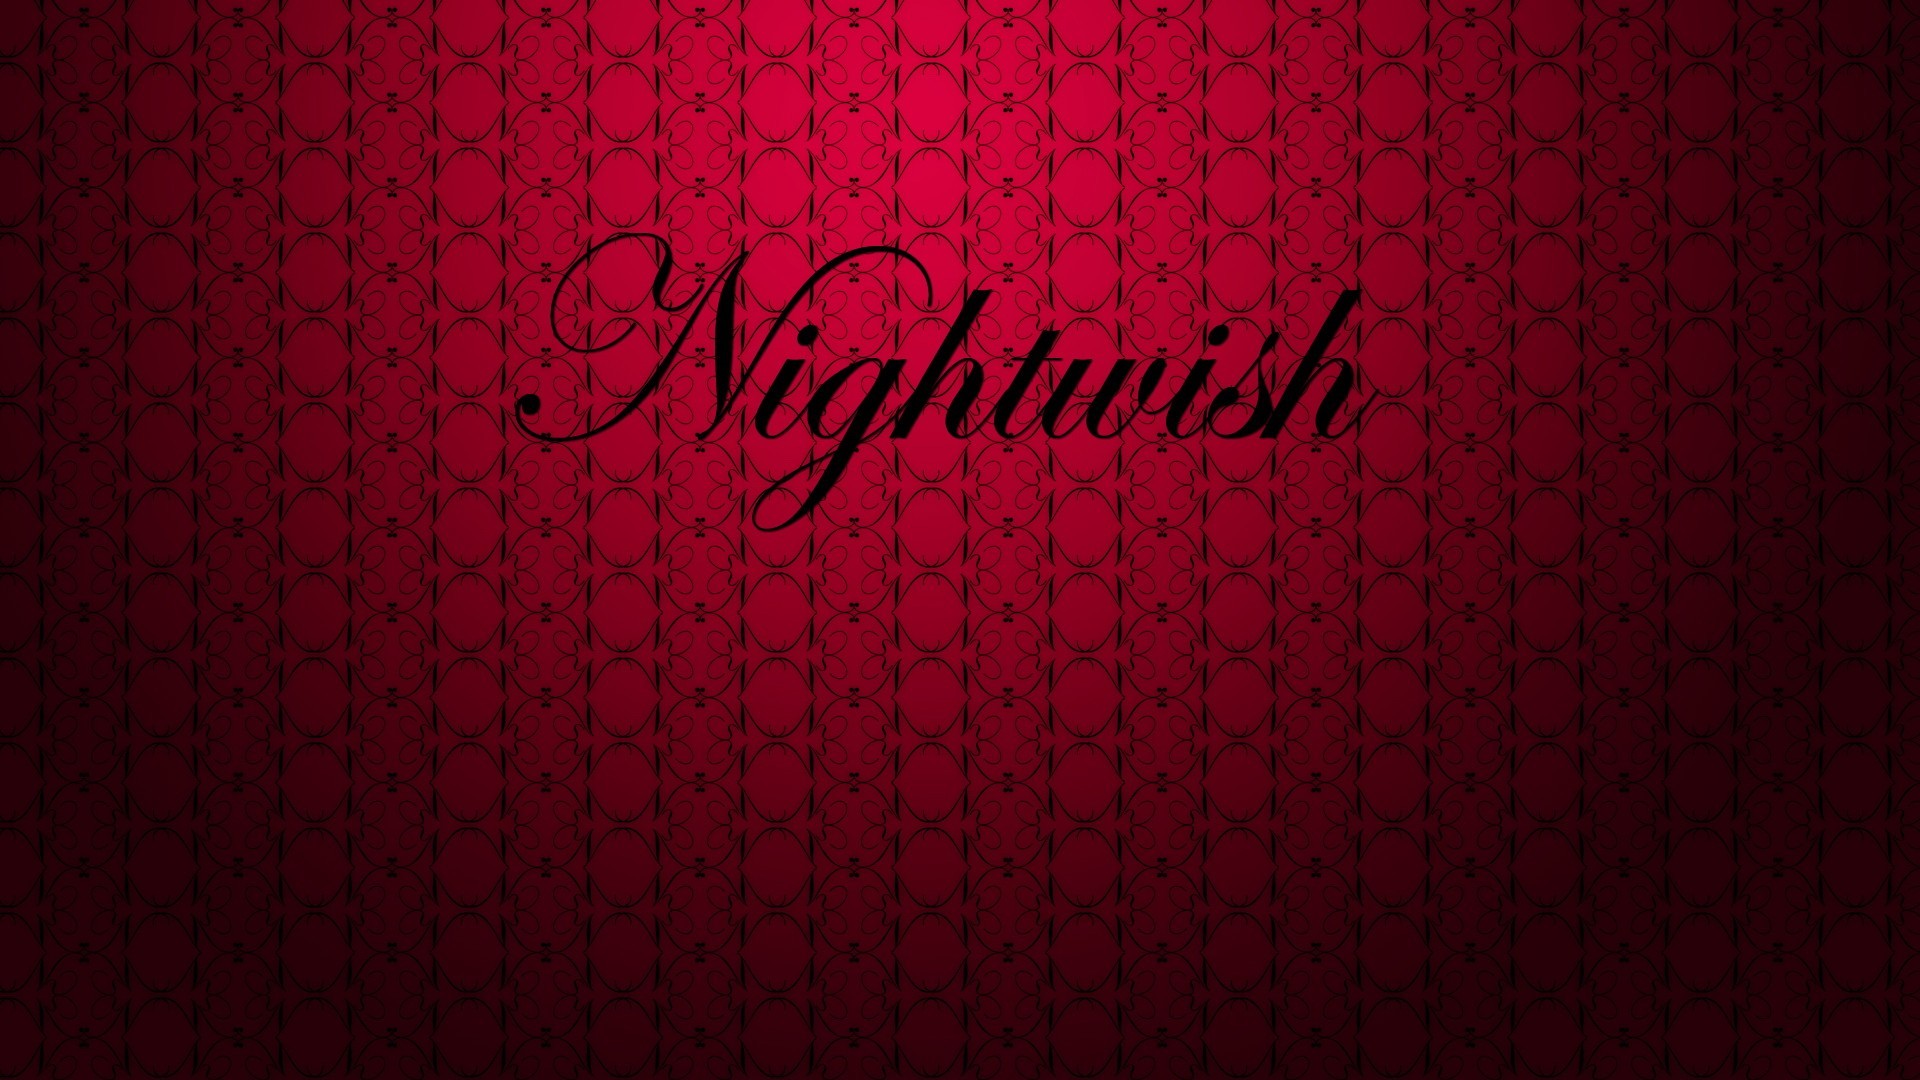 Nightwish Wallpapers